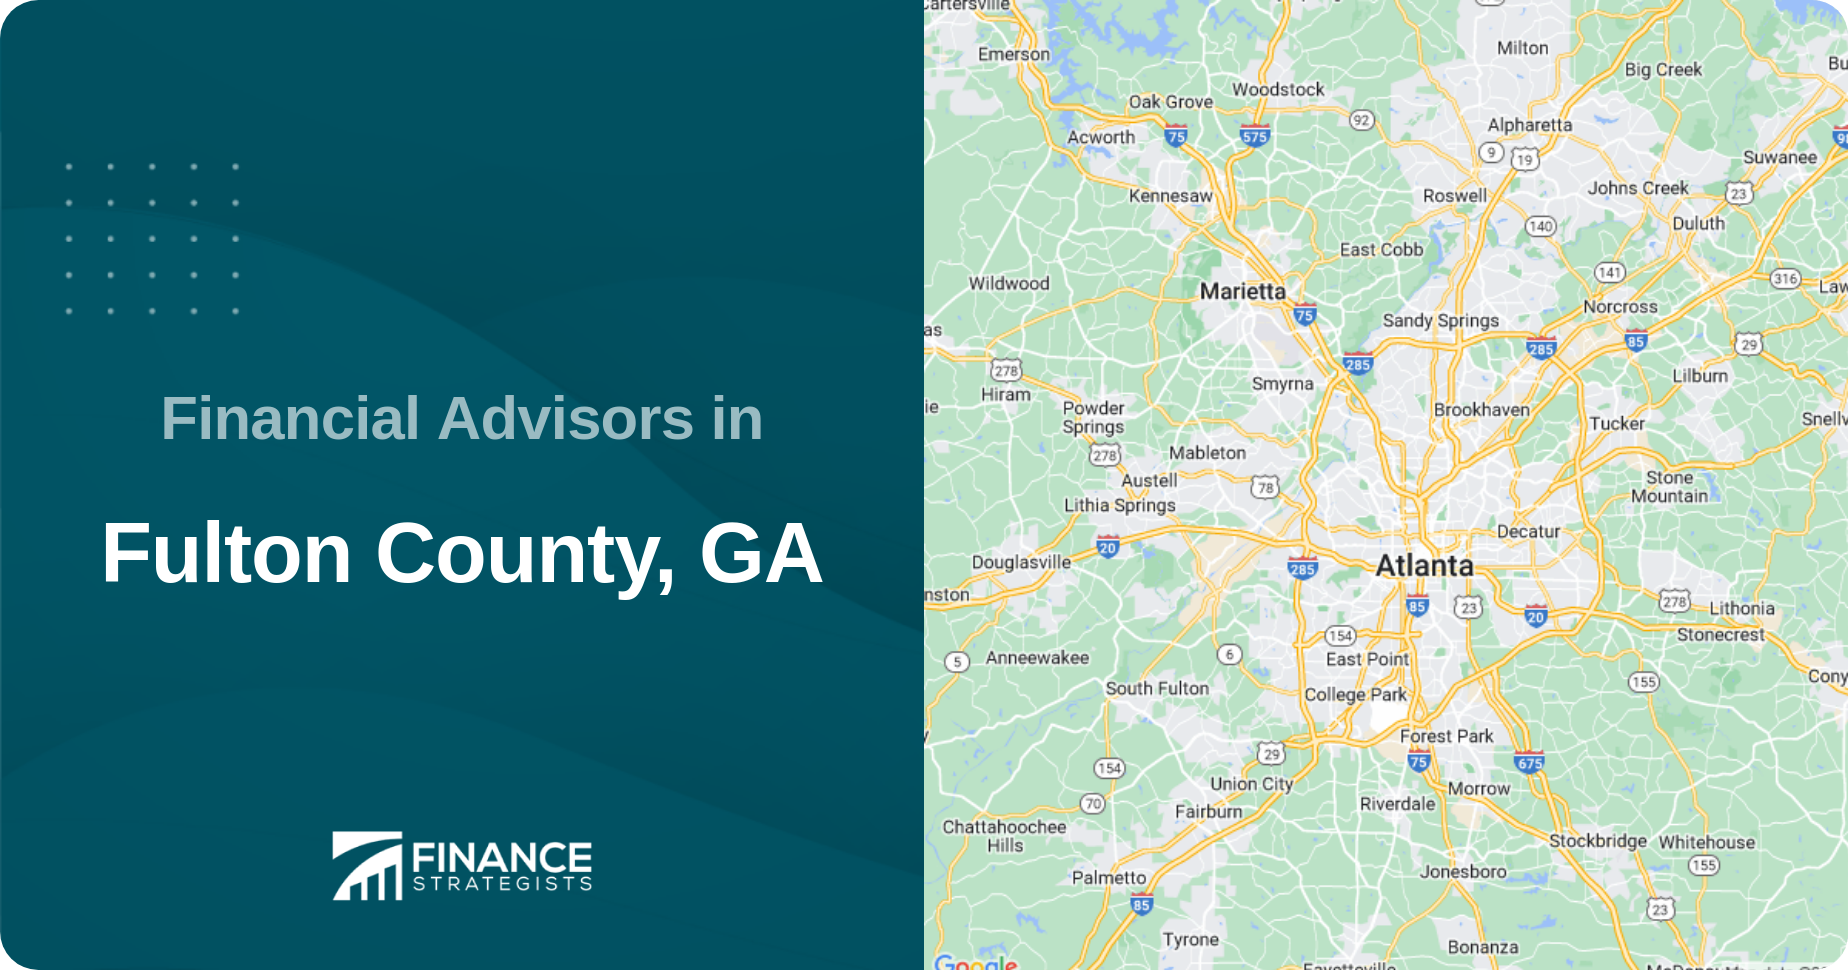 Financial Advisors in Fulton County, GA